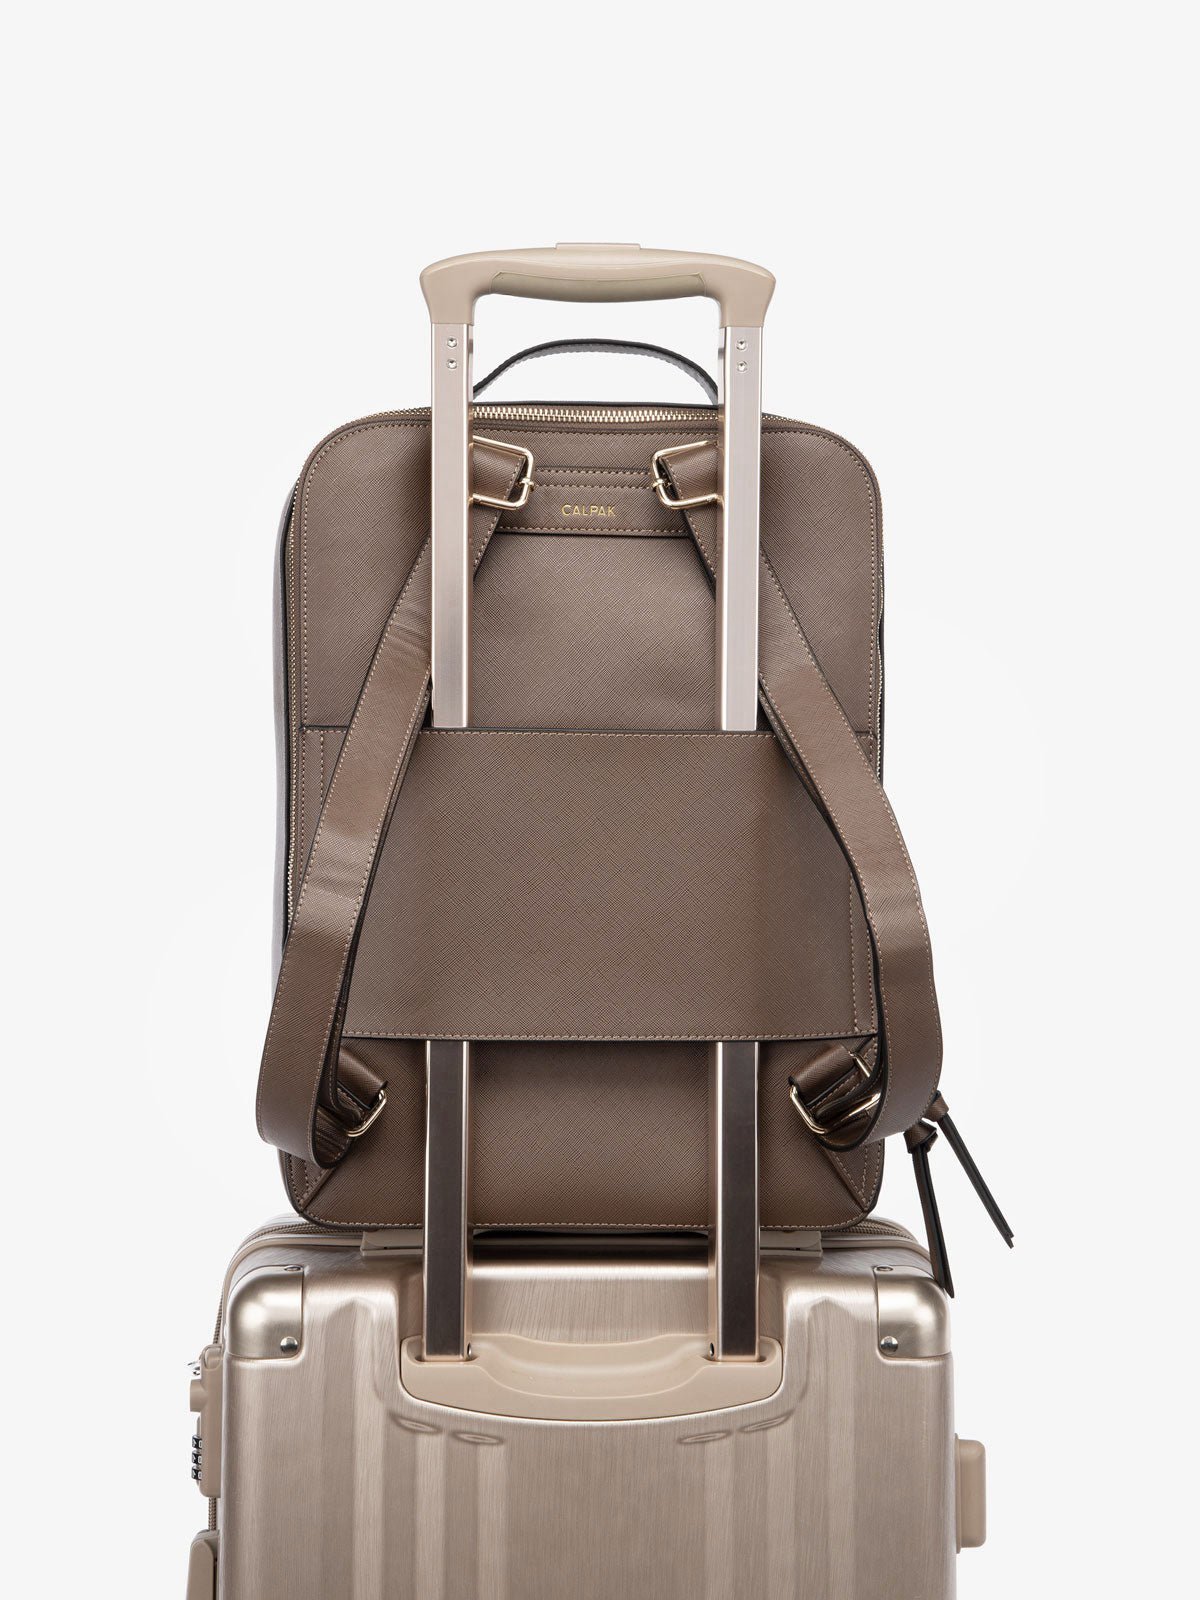 brown CALPAK Kaya Laptop Backpack with trolley sleeve for travel